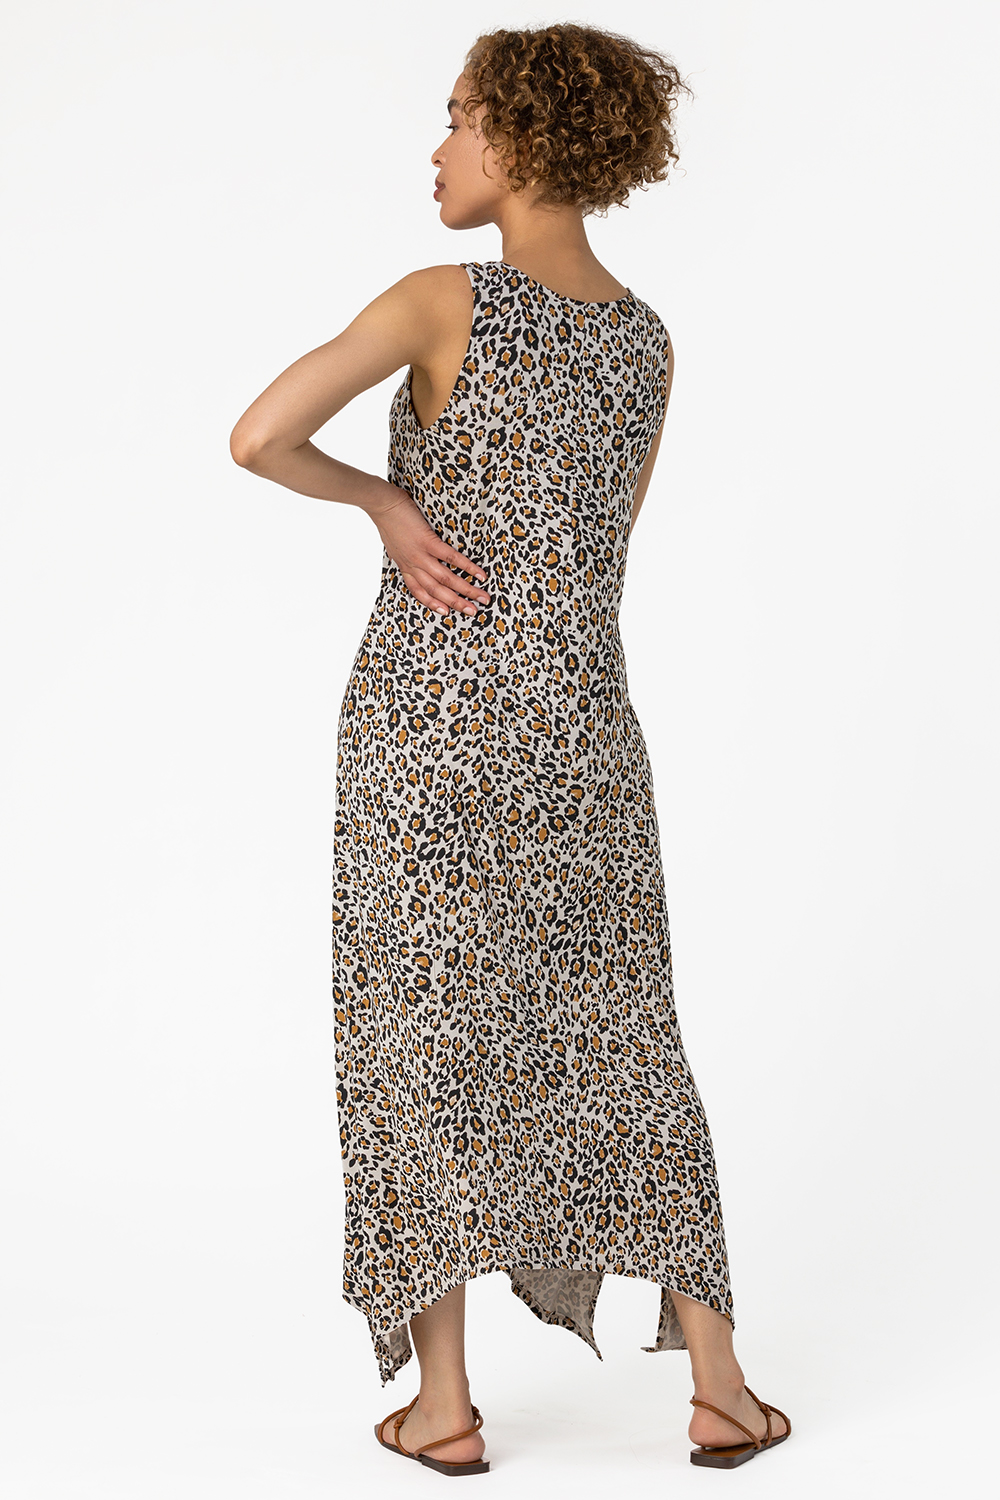 Stone Cheetah Print Hanky Hem Stretch Dress, Image 2 of 5